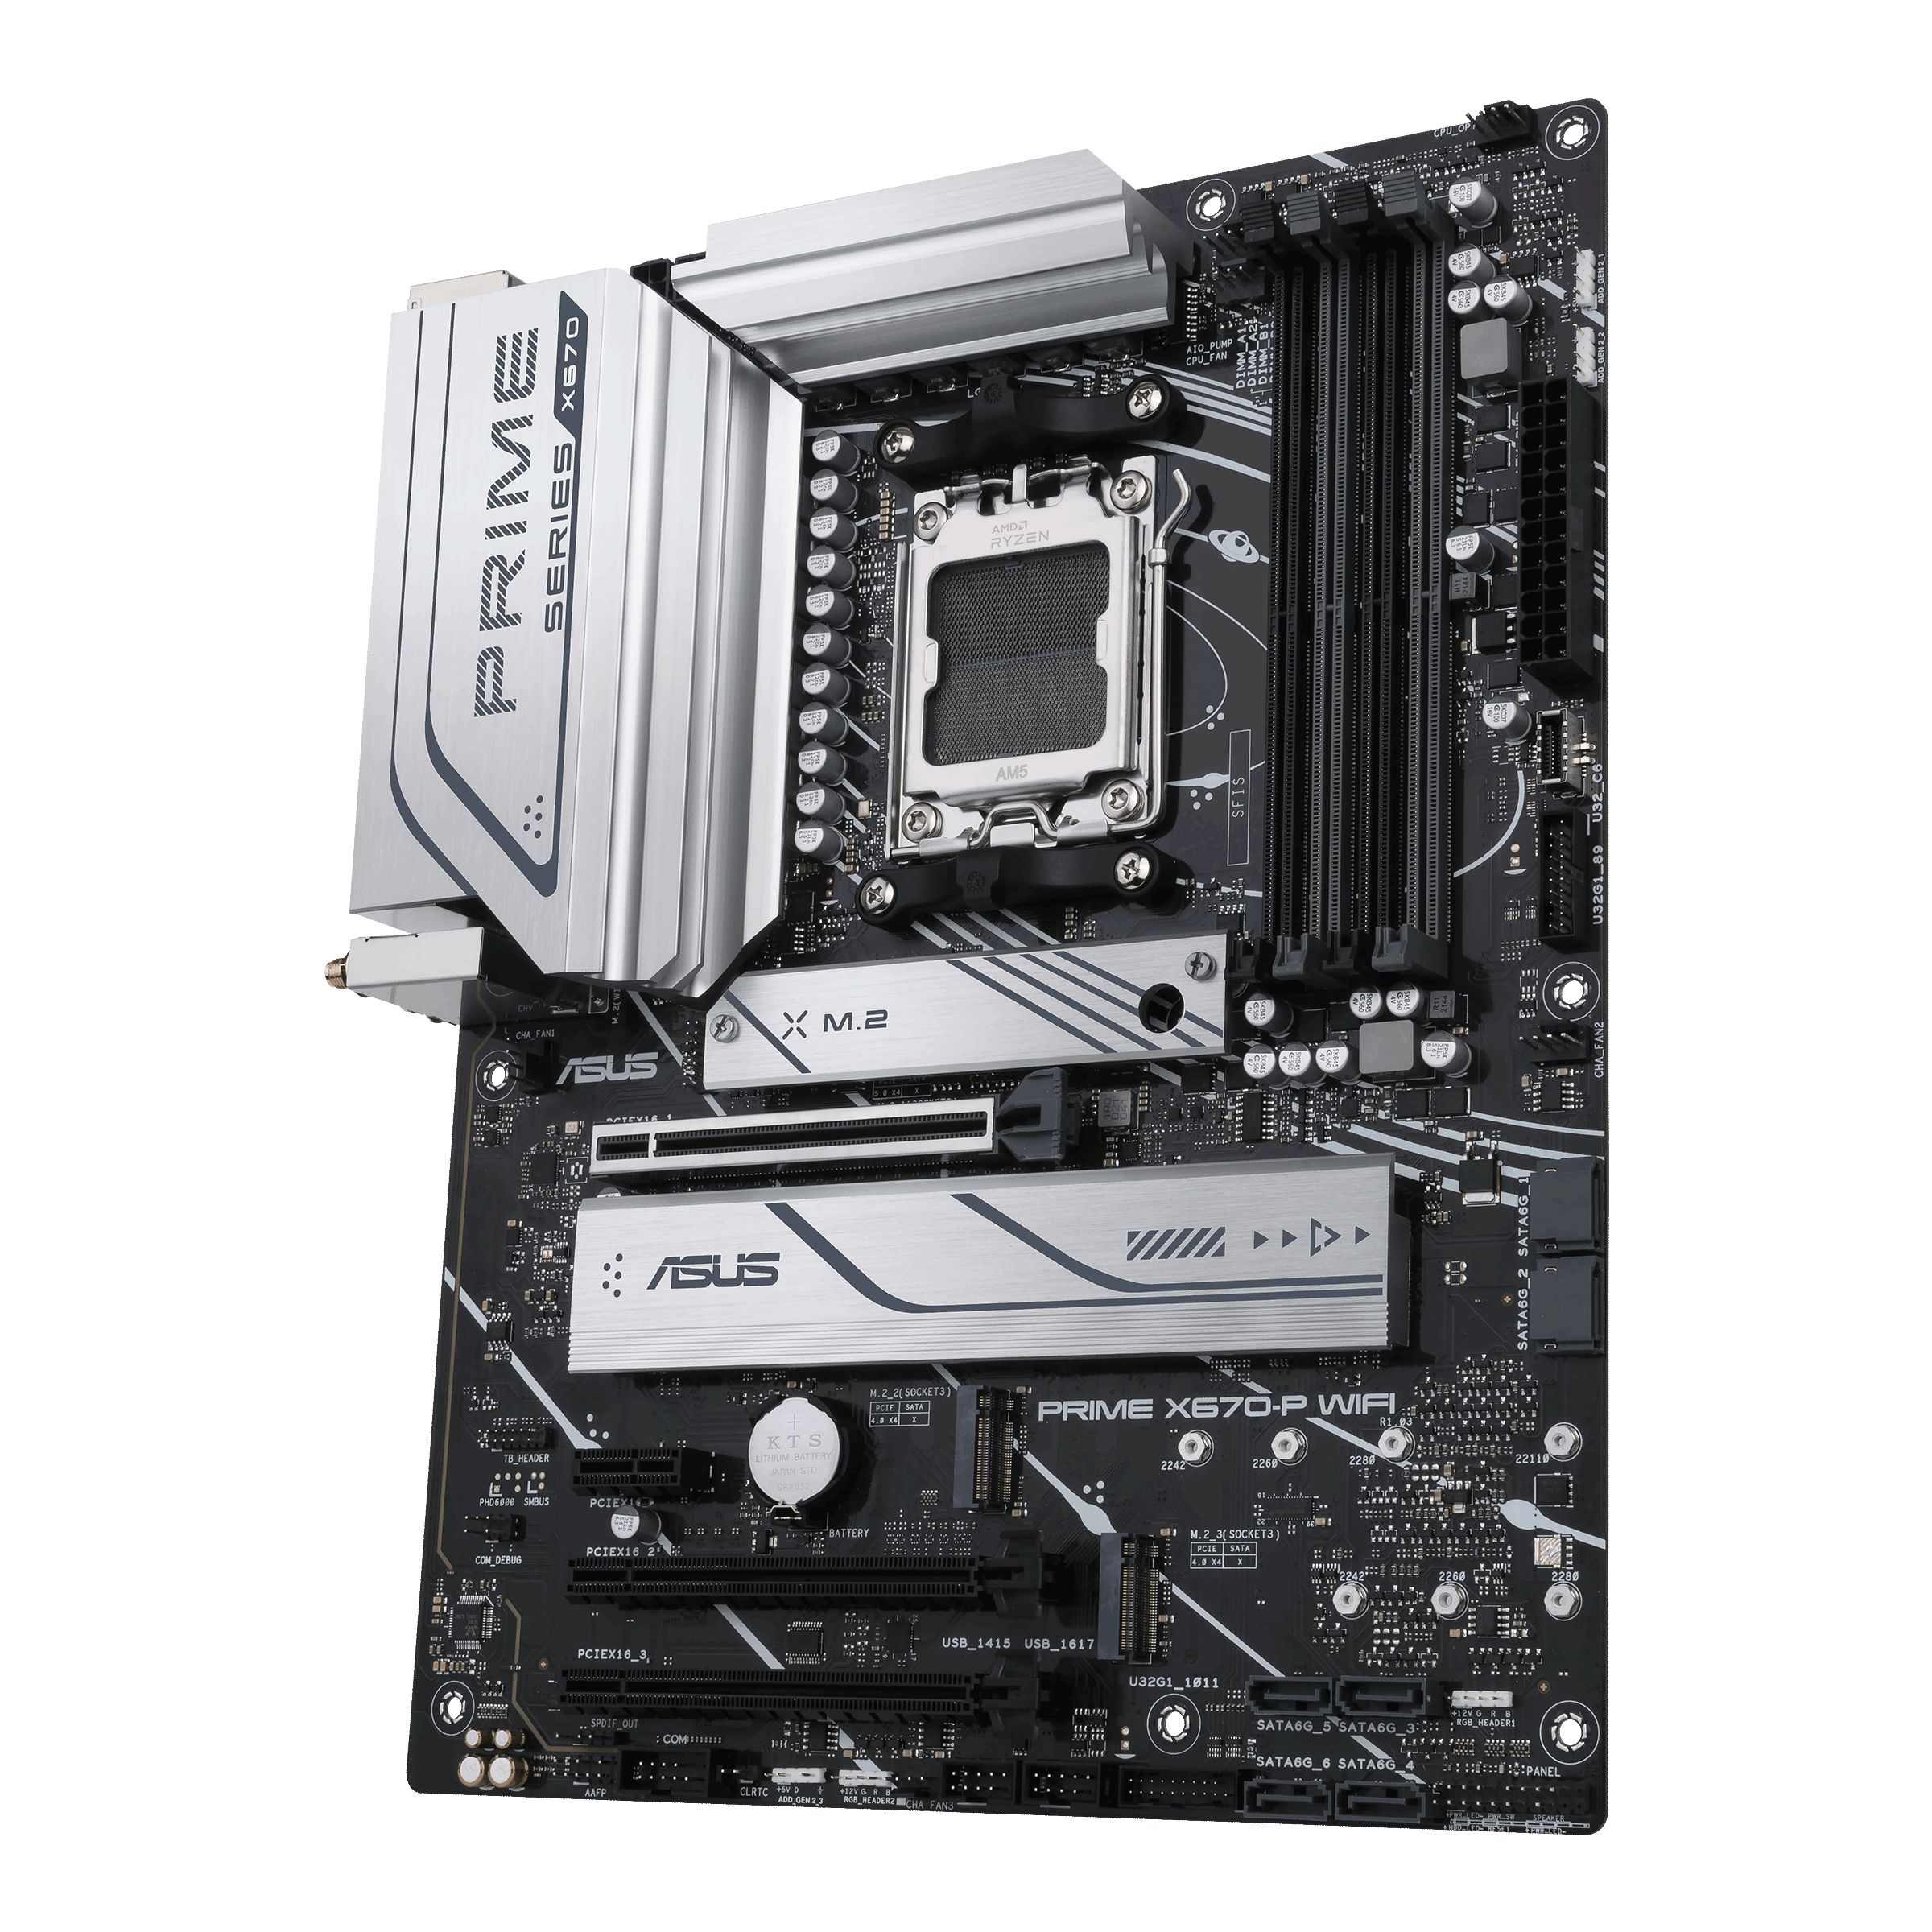 ASUS Prime X670-P WIFI - AMD X670 - So. AM5 - ATX